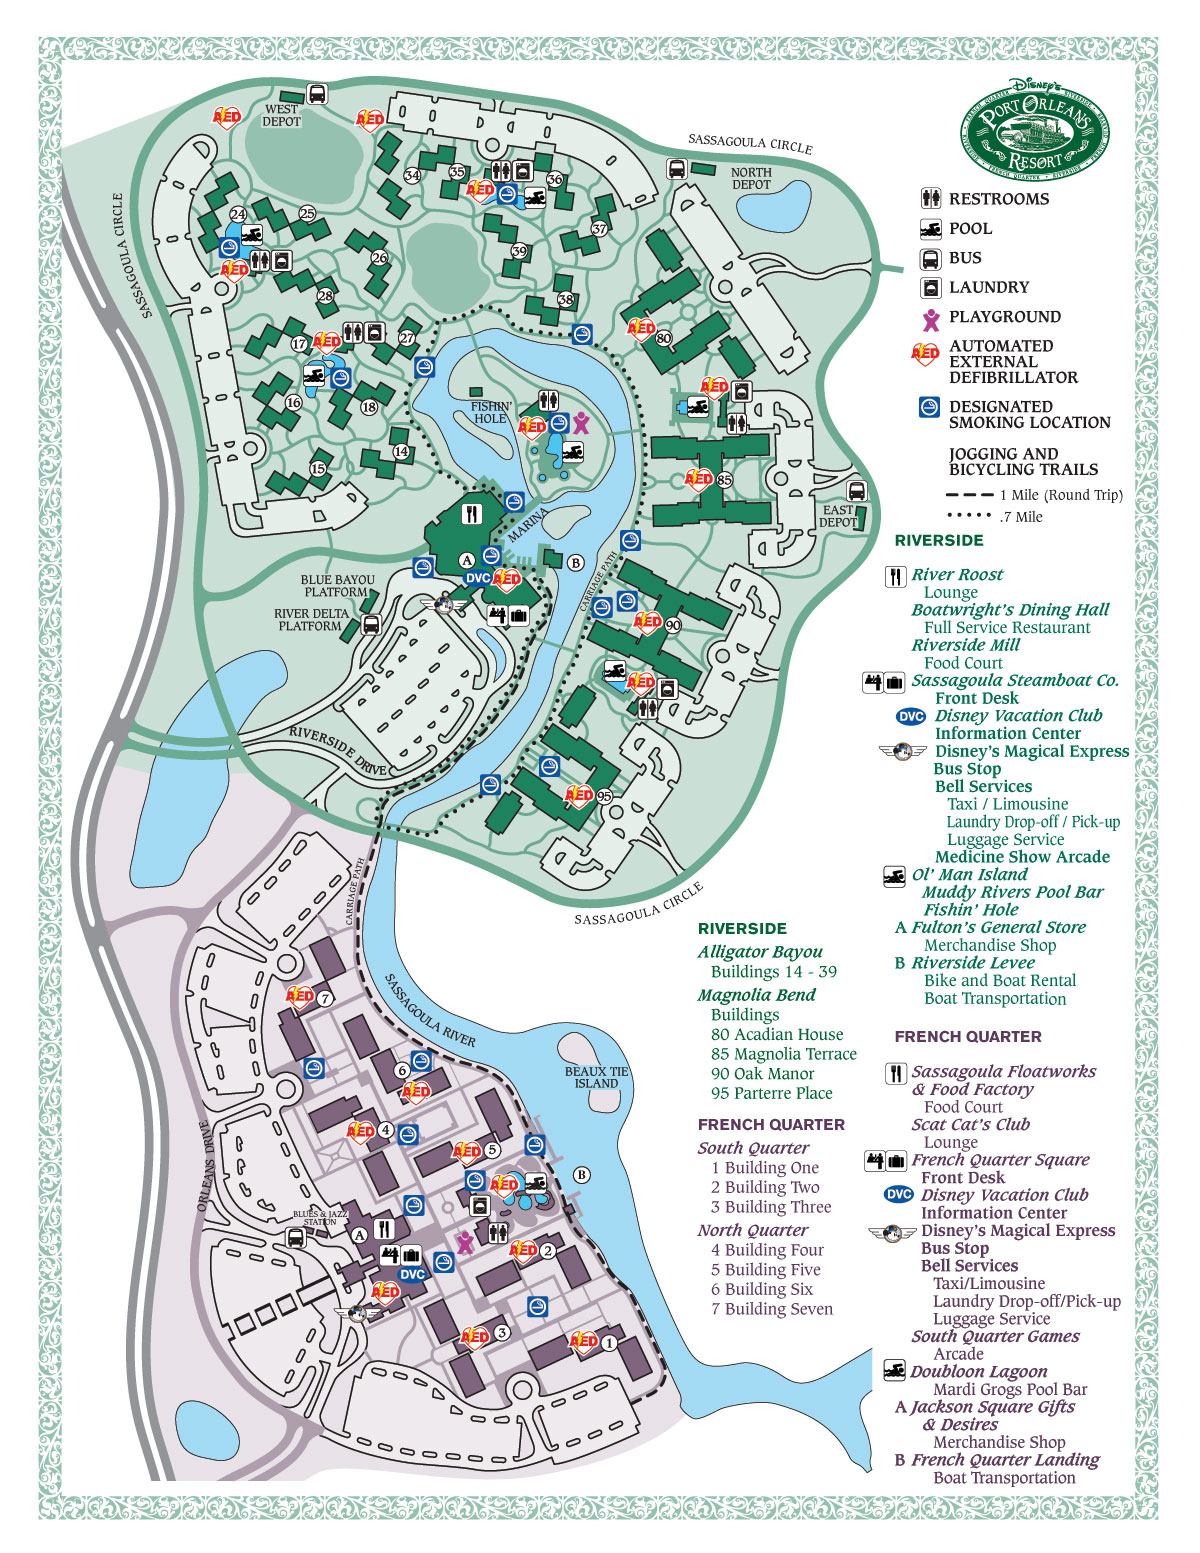 Disney's Port Orleans Riverside map 